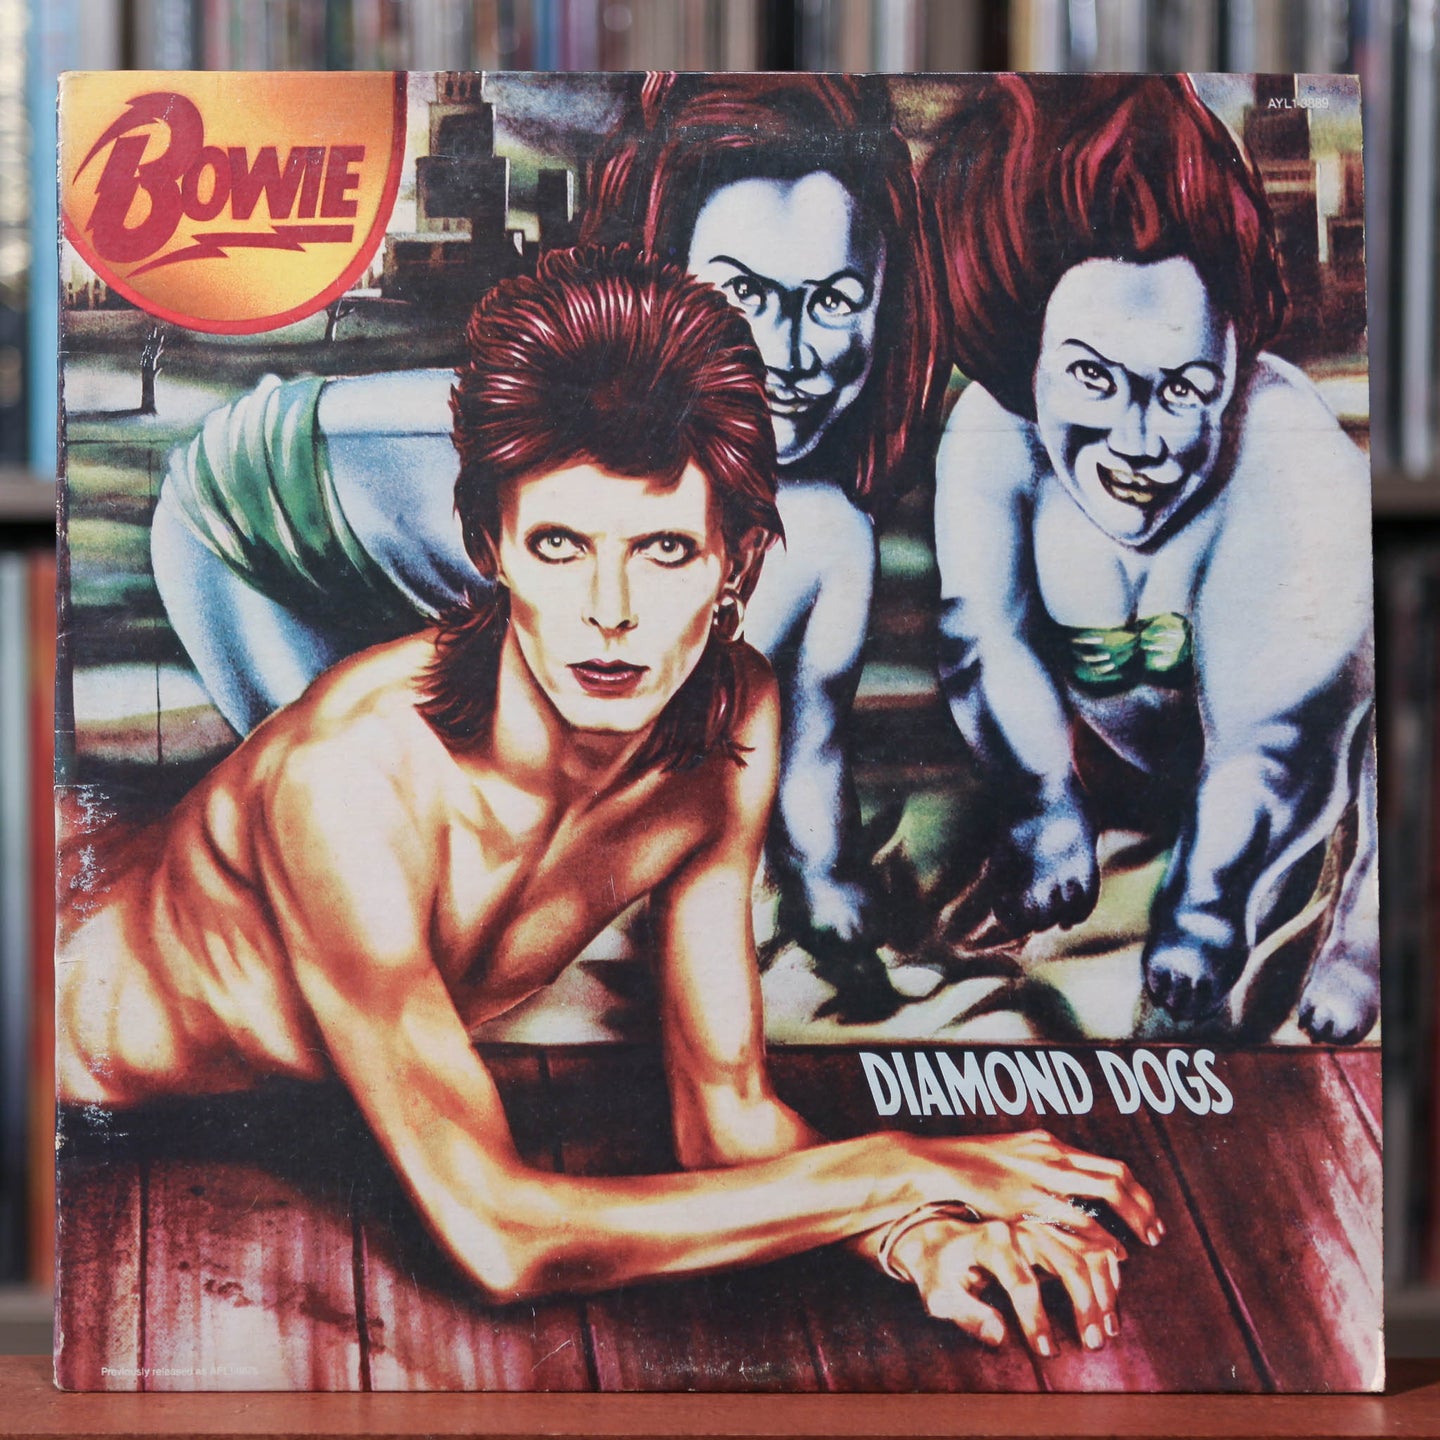 David Bowie - Diamond Dogs - 1974 RCA, VG+/VG+